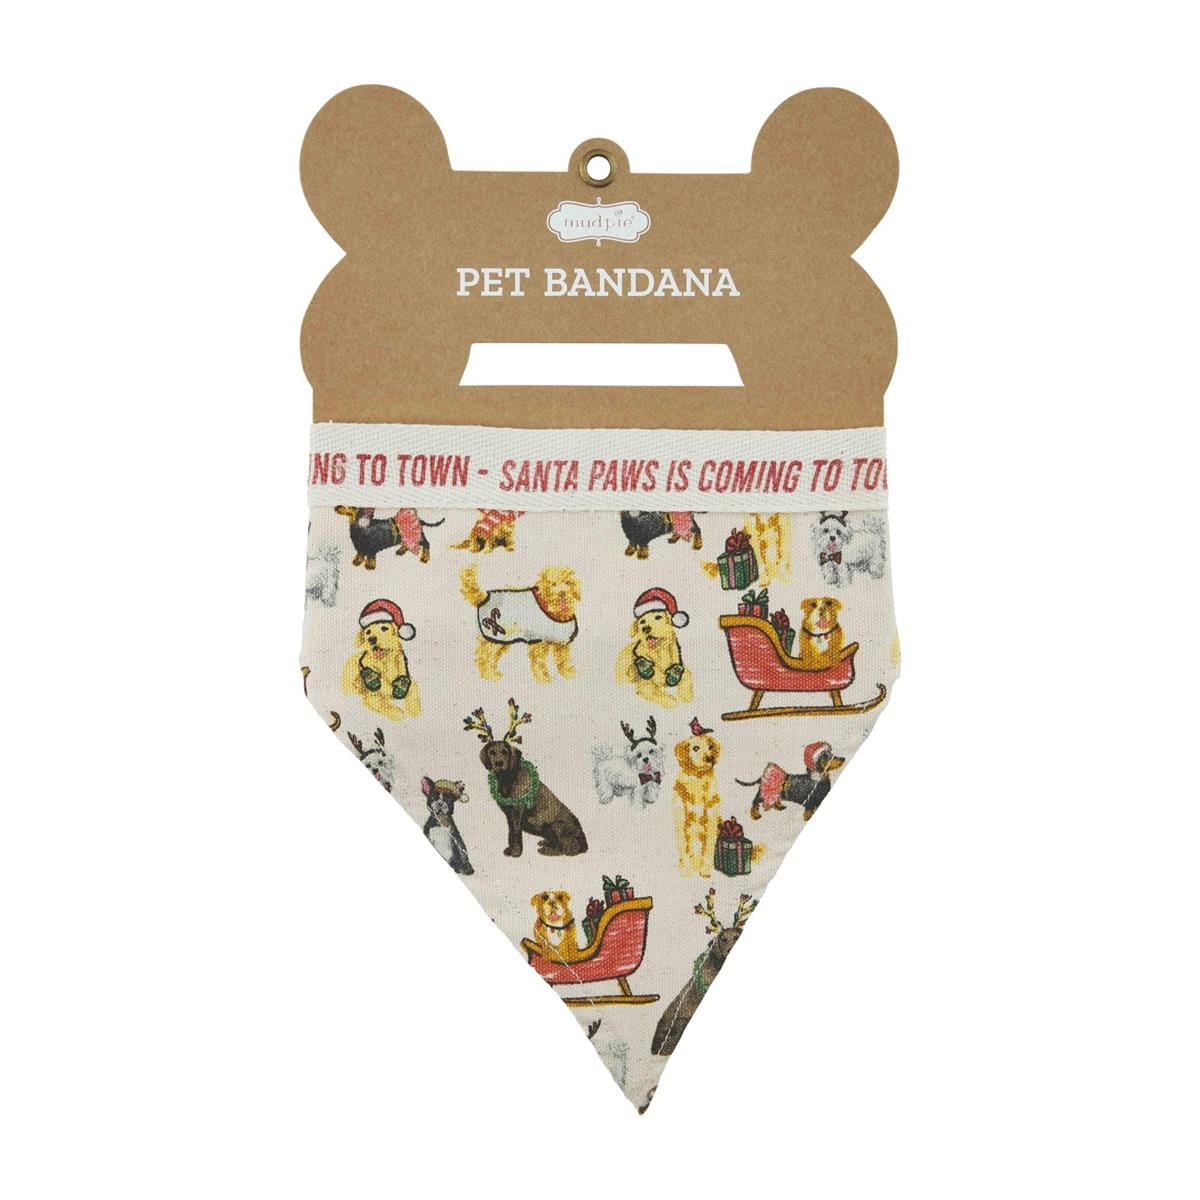 Pet Bandana Holiday Theme by Mud Pie Mud Pie Pet Santa Paws is Coming to Town